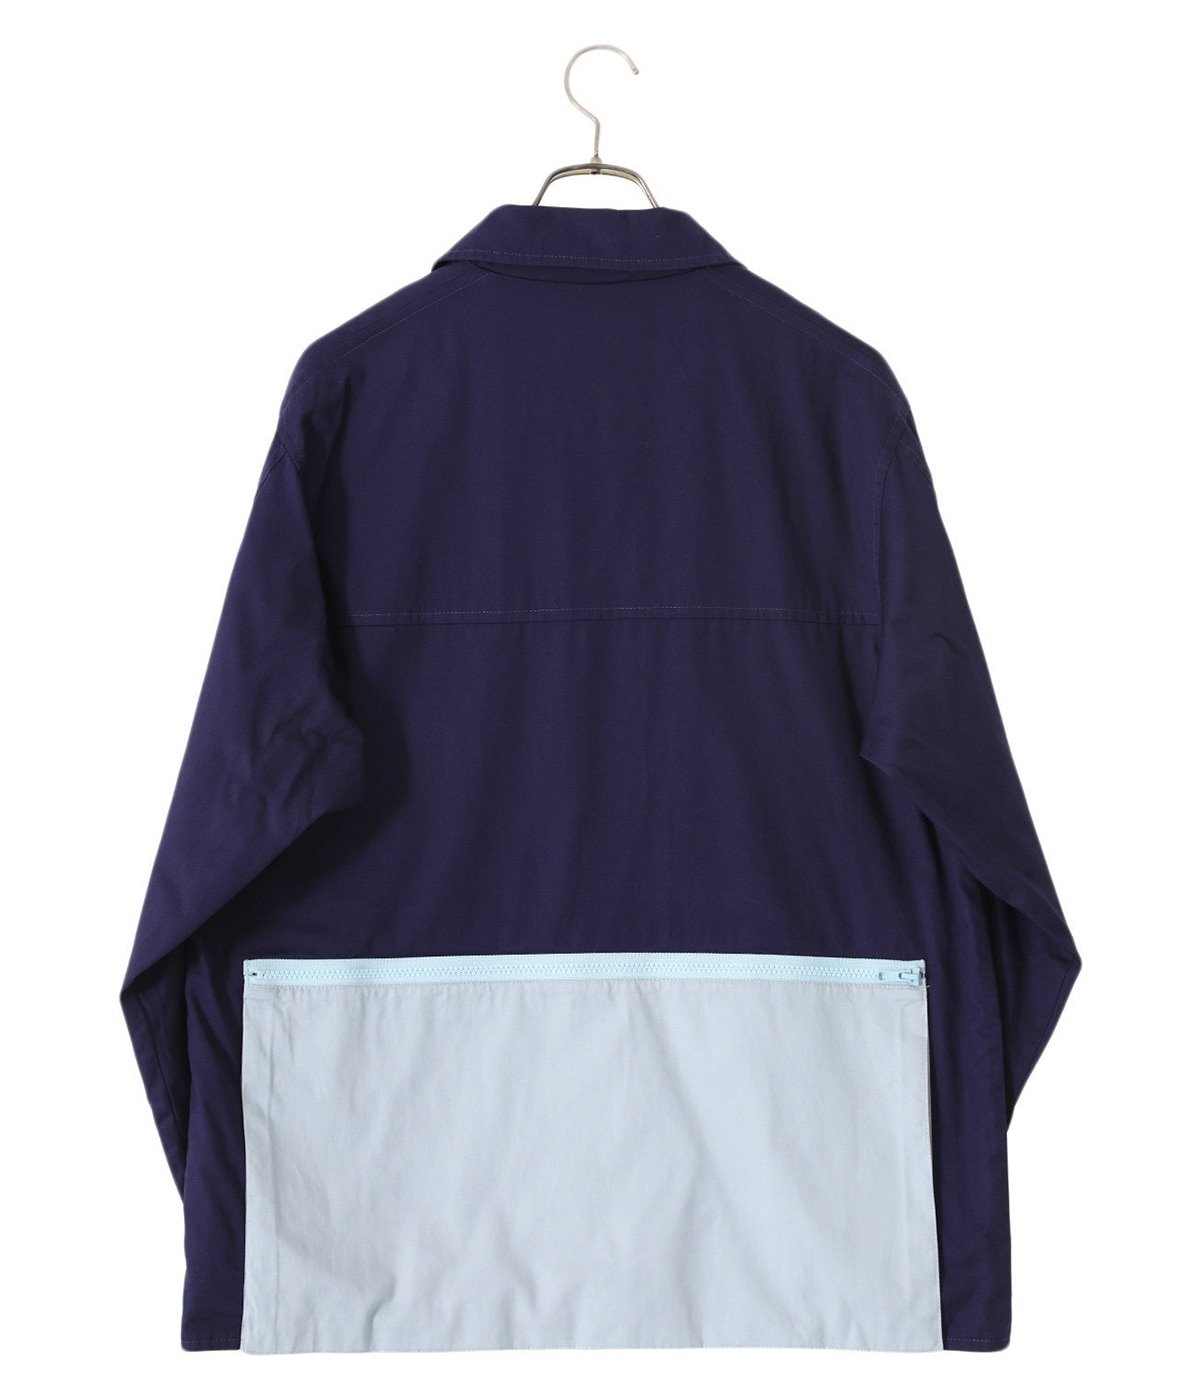 BOTT/ボット Pocket pullover jacket XLサイズXL - mypantum.com